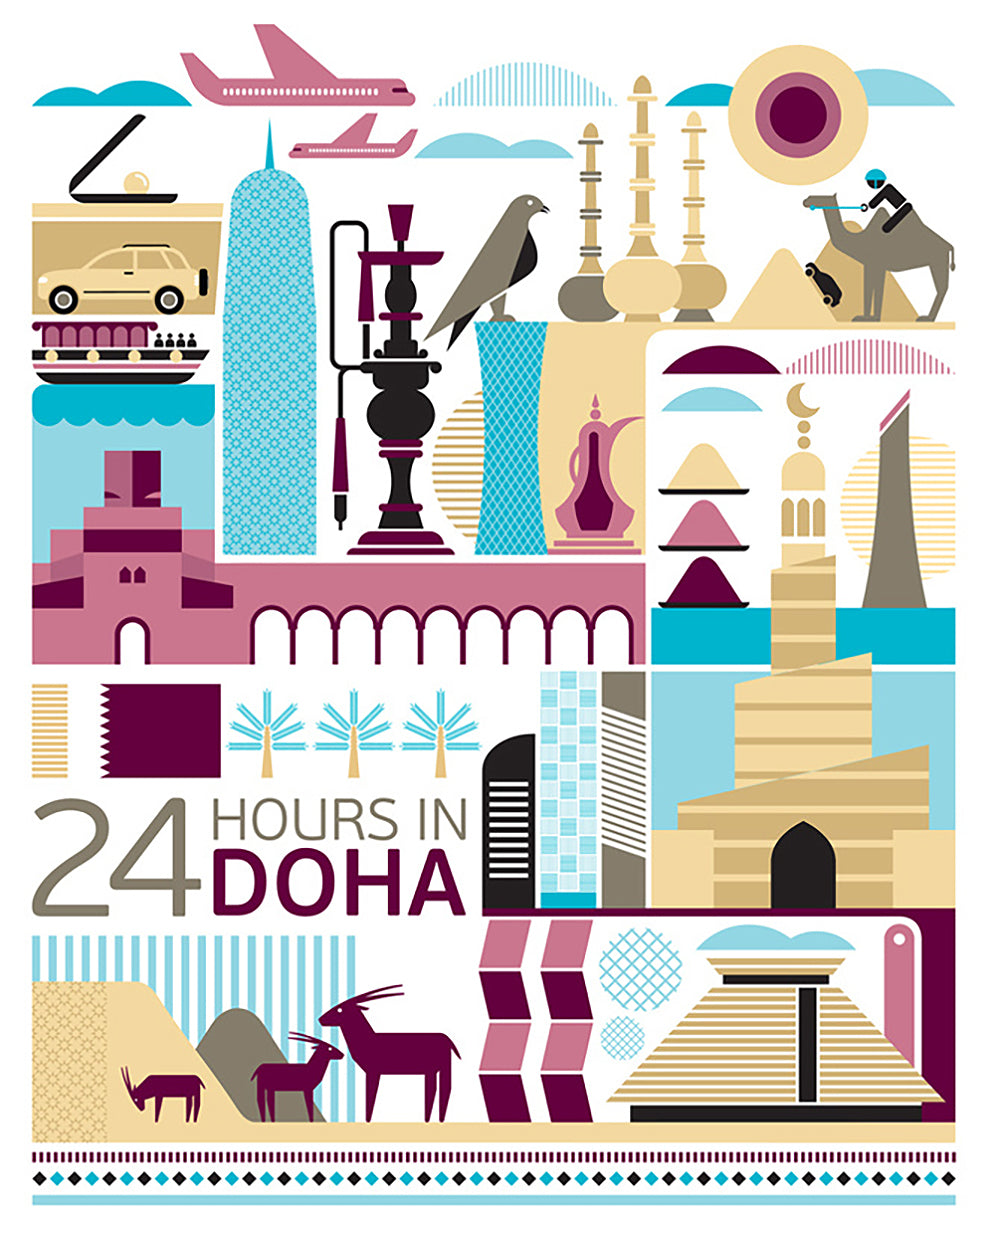 Safari Journal / Blog by Safari Fusion | 24 hours in Doha | Modern travel posters by graphic designer Fernando Volken Togni